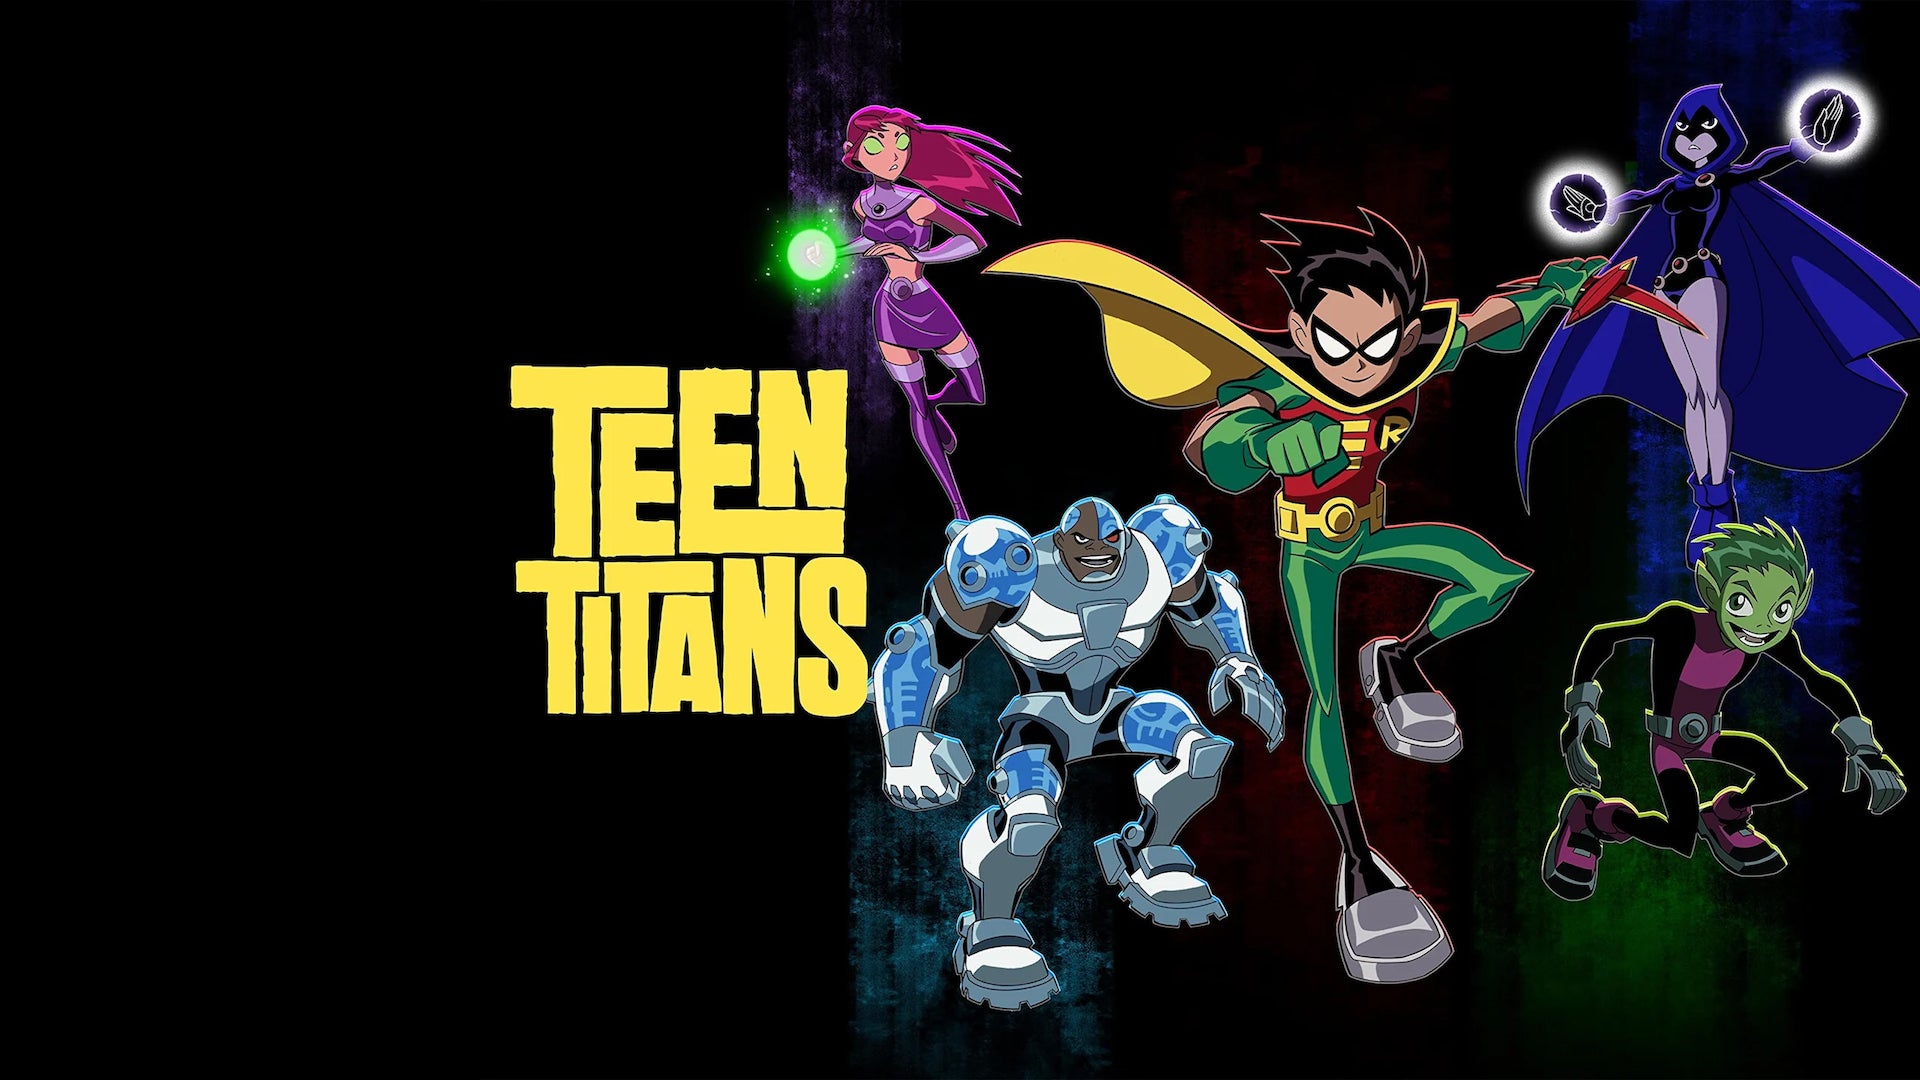 Teen Titans: The Complete 2nd Season DVD Box Set